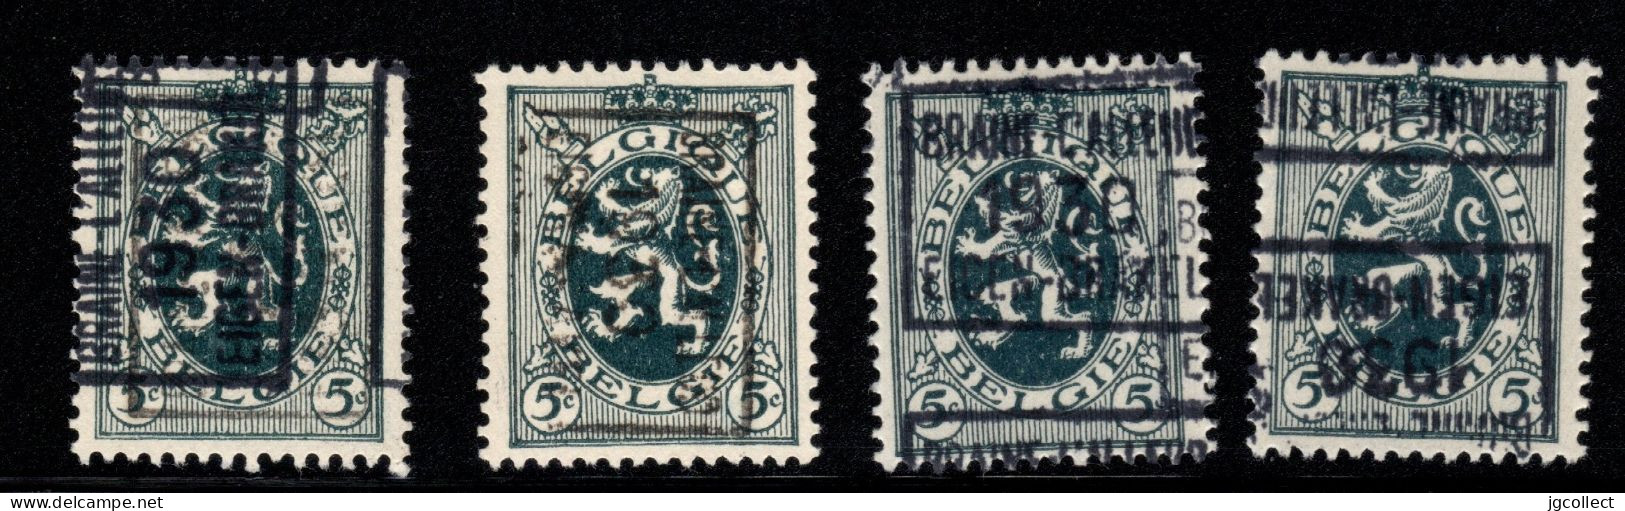 Preo's (279) "BRAINE-L'ALLEUD 1930 EIGEN-BRAKEL" OCVB 5742 A+B+C+D - Rollenmarken 1930-..